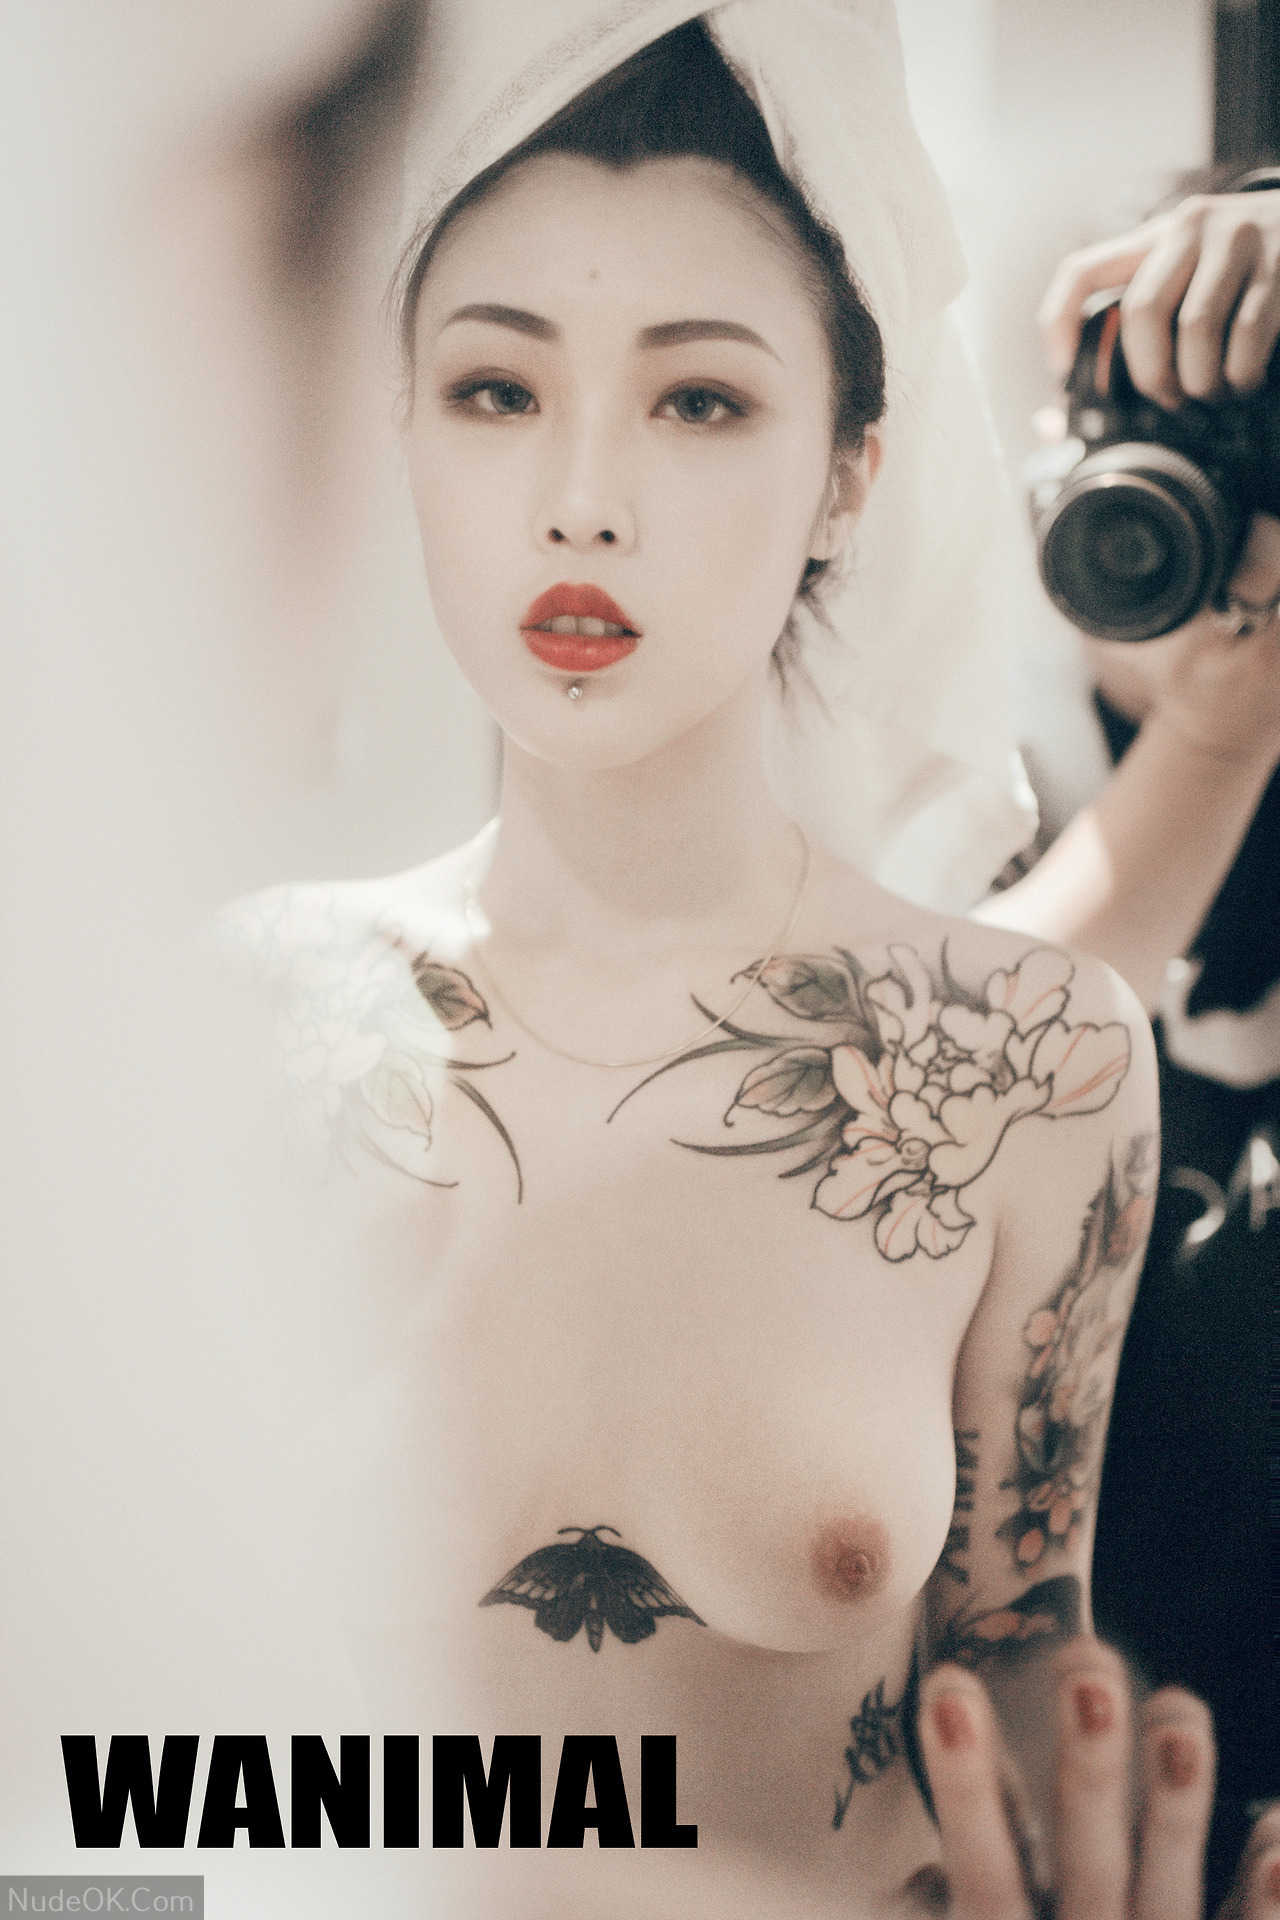 NudeOK.Com - Nude Art Set - WANIMAL นางแบบจีน - อีโรติก - นู้ด; - Porn art asian